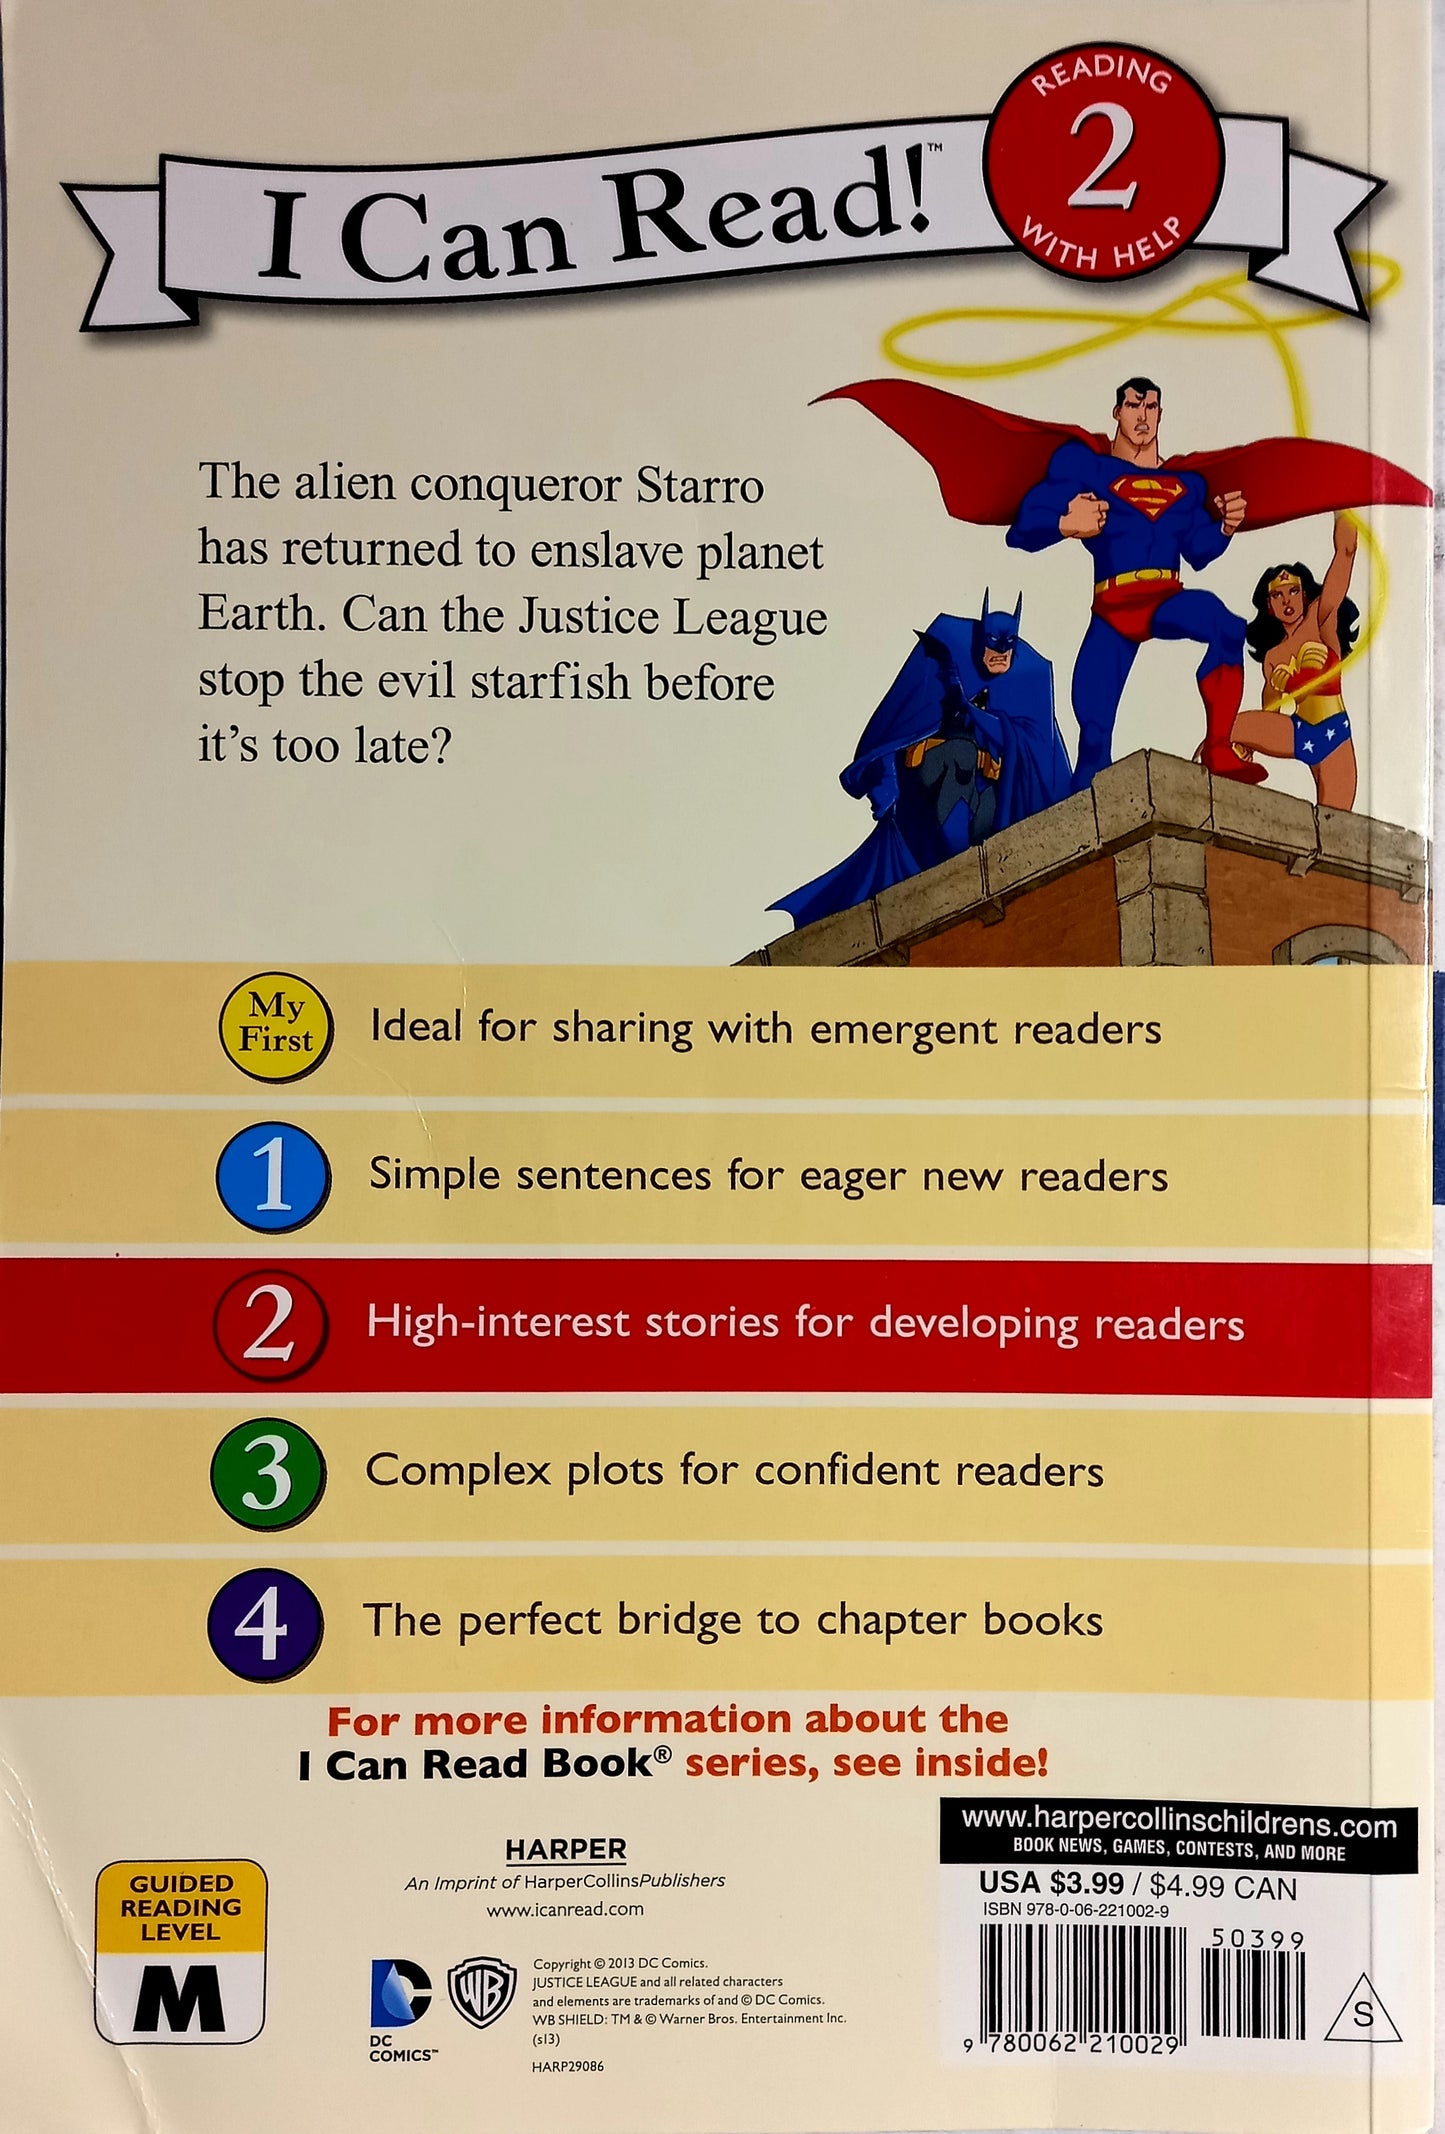 Justice League: Meet the Justice League